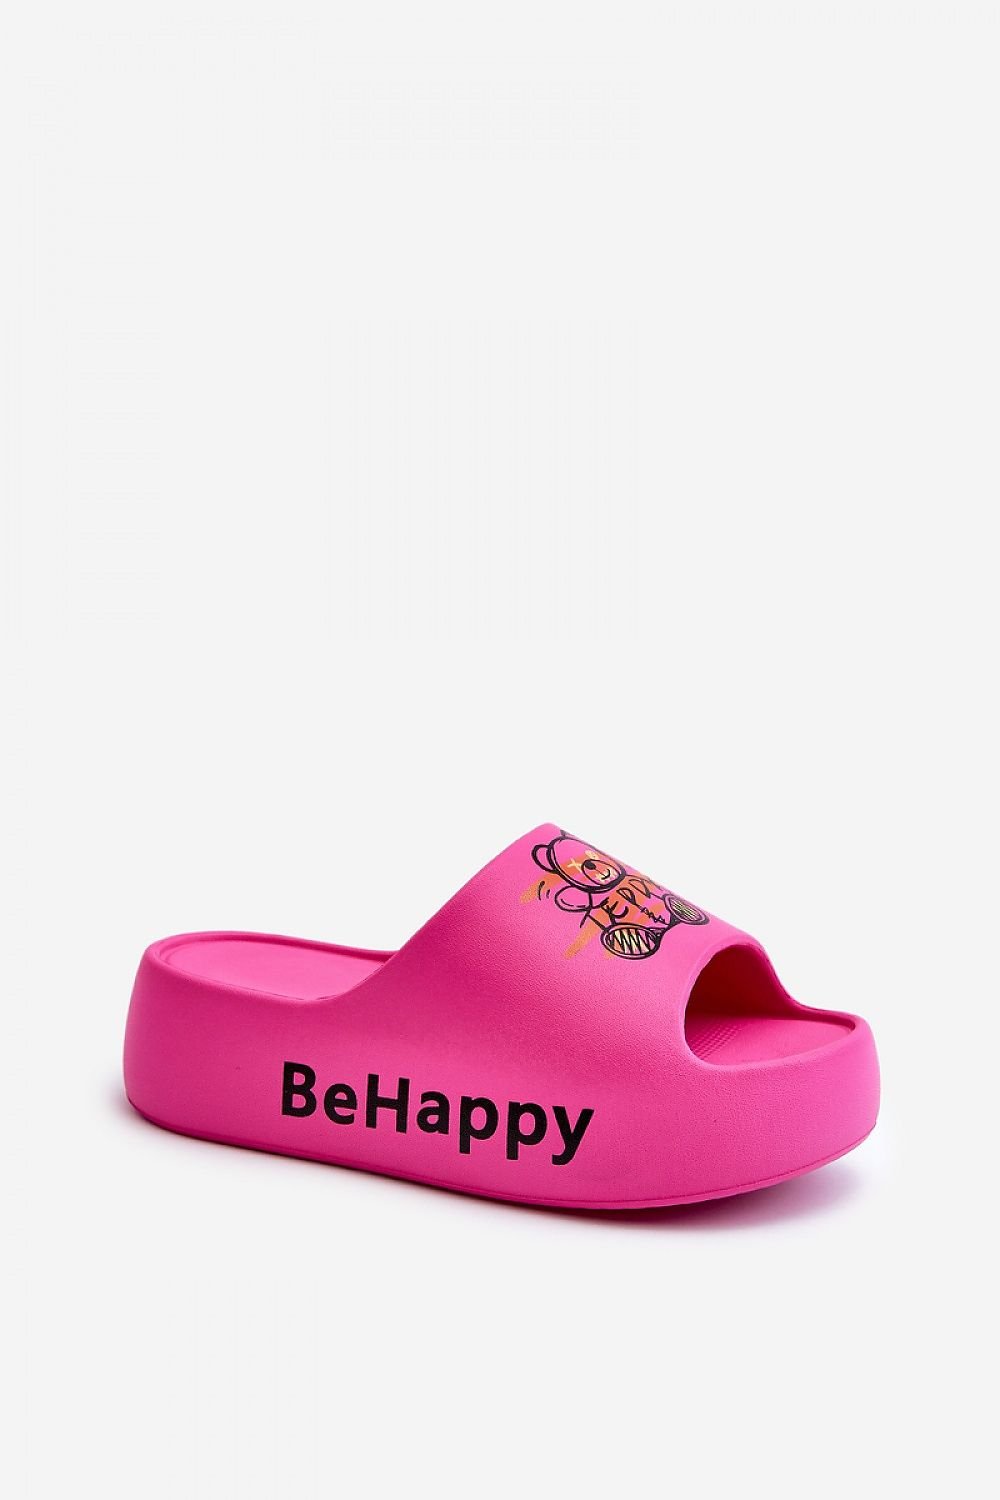 TEEK - Be Happy Bear Platform Slides SHOES TEEK MH pink 6 